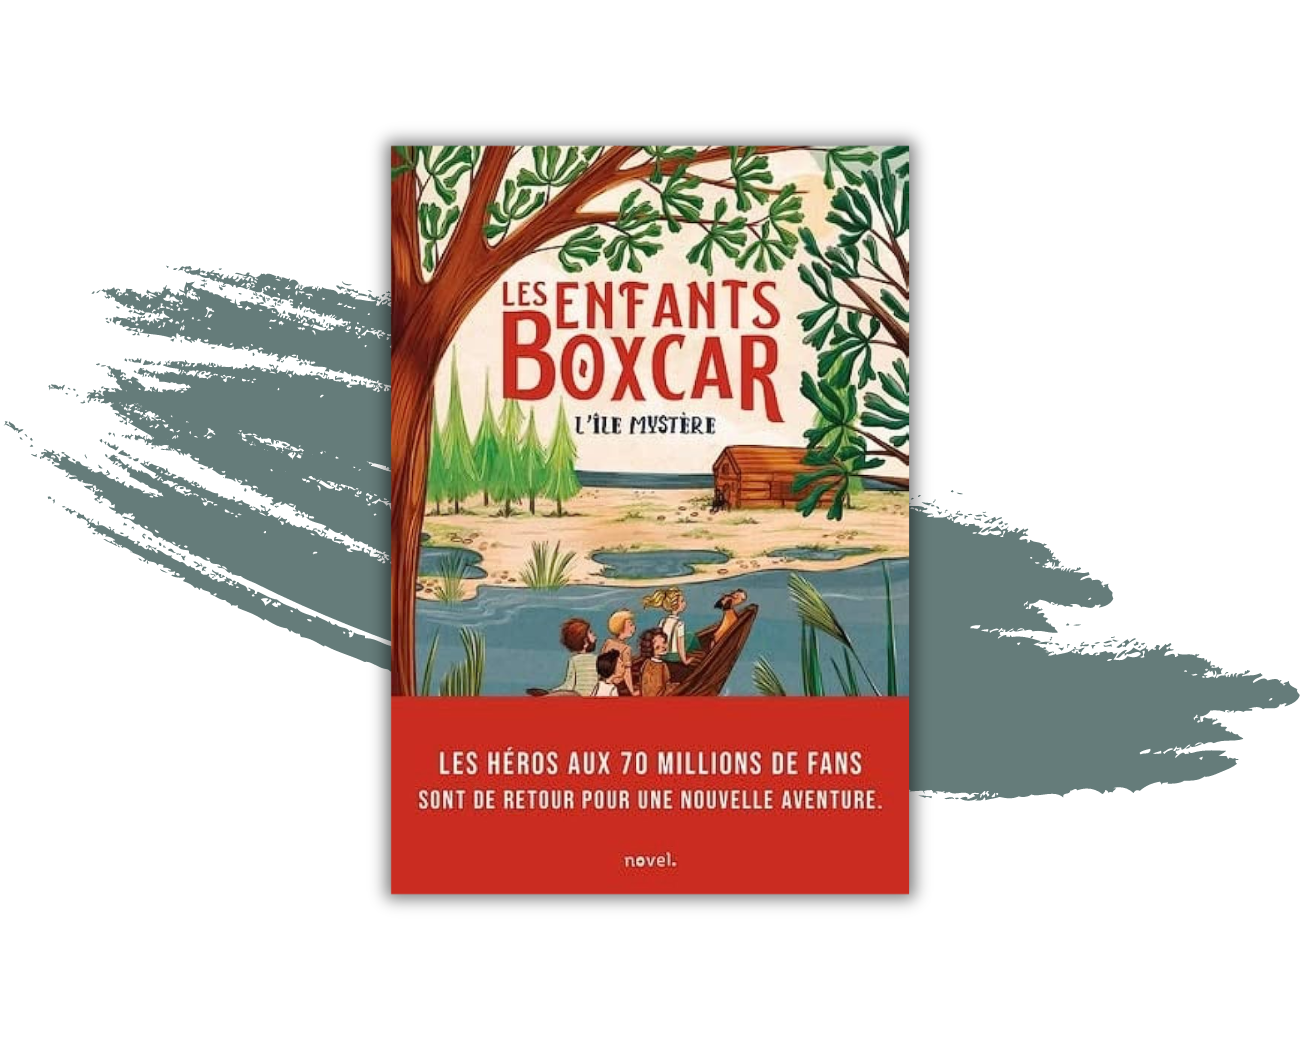 Le livre "Les enfants Boxcar- tome 2 L'ïle mystère" de Gertrude Chandler Warner.